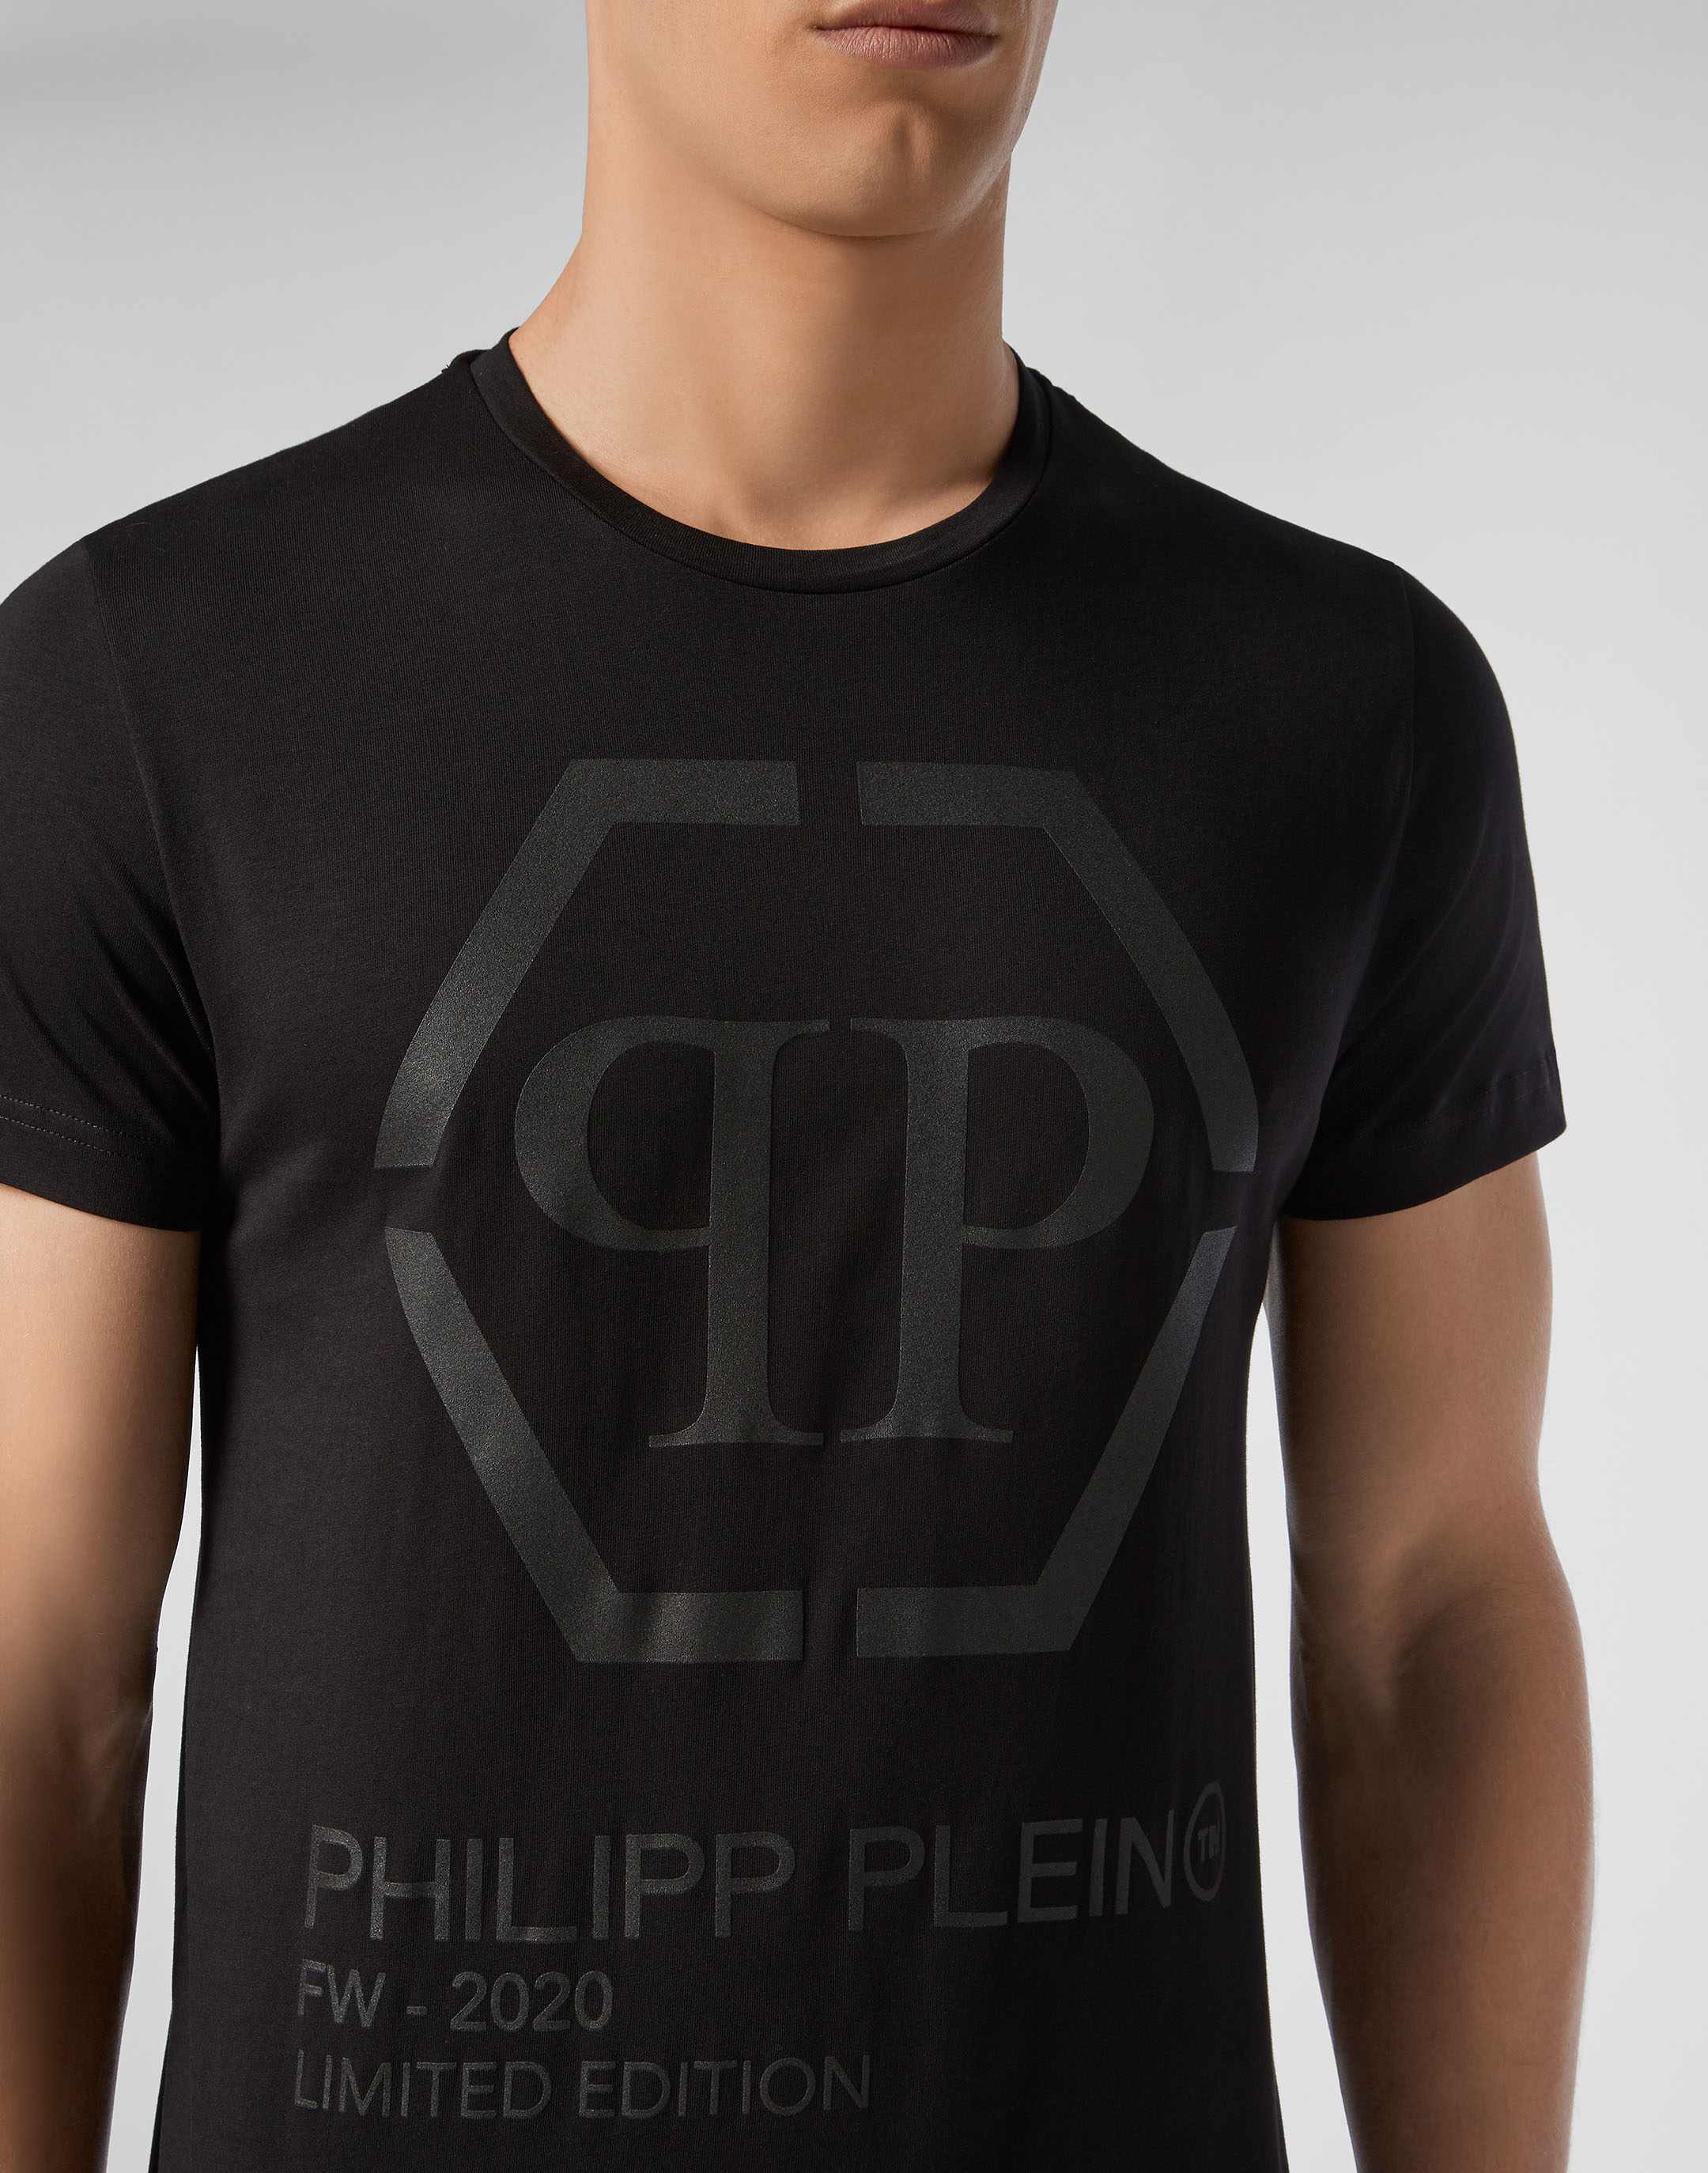 philipp plein t shirts online india